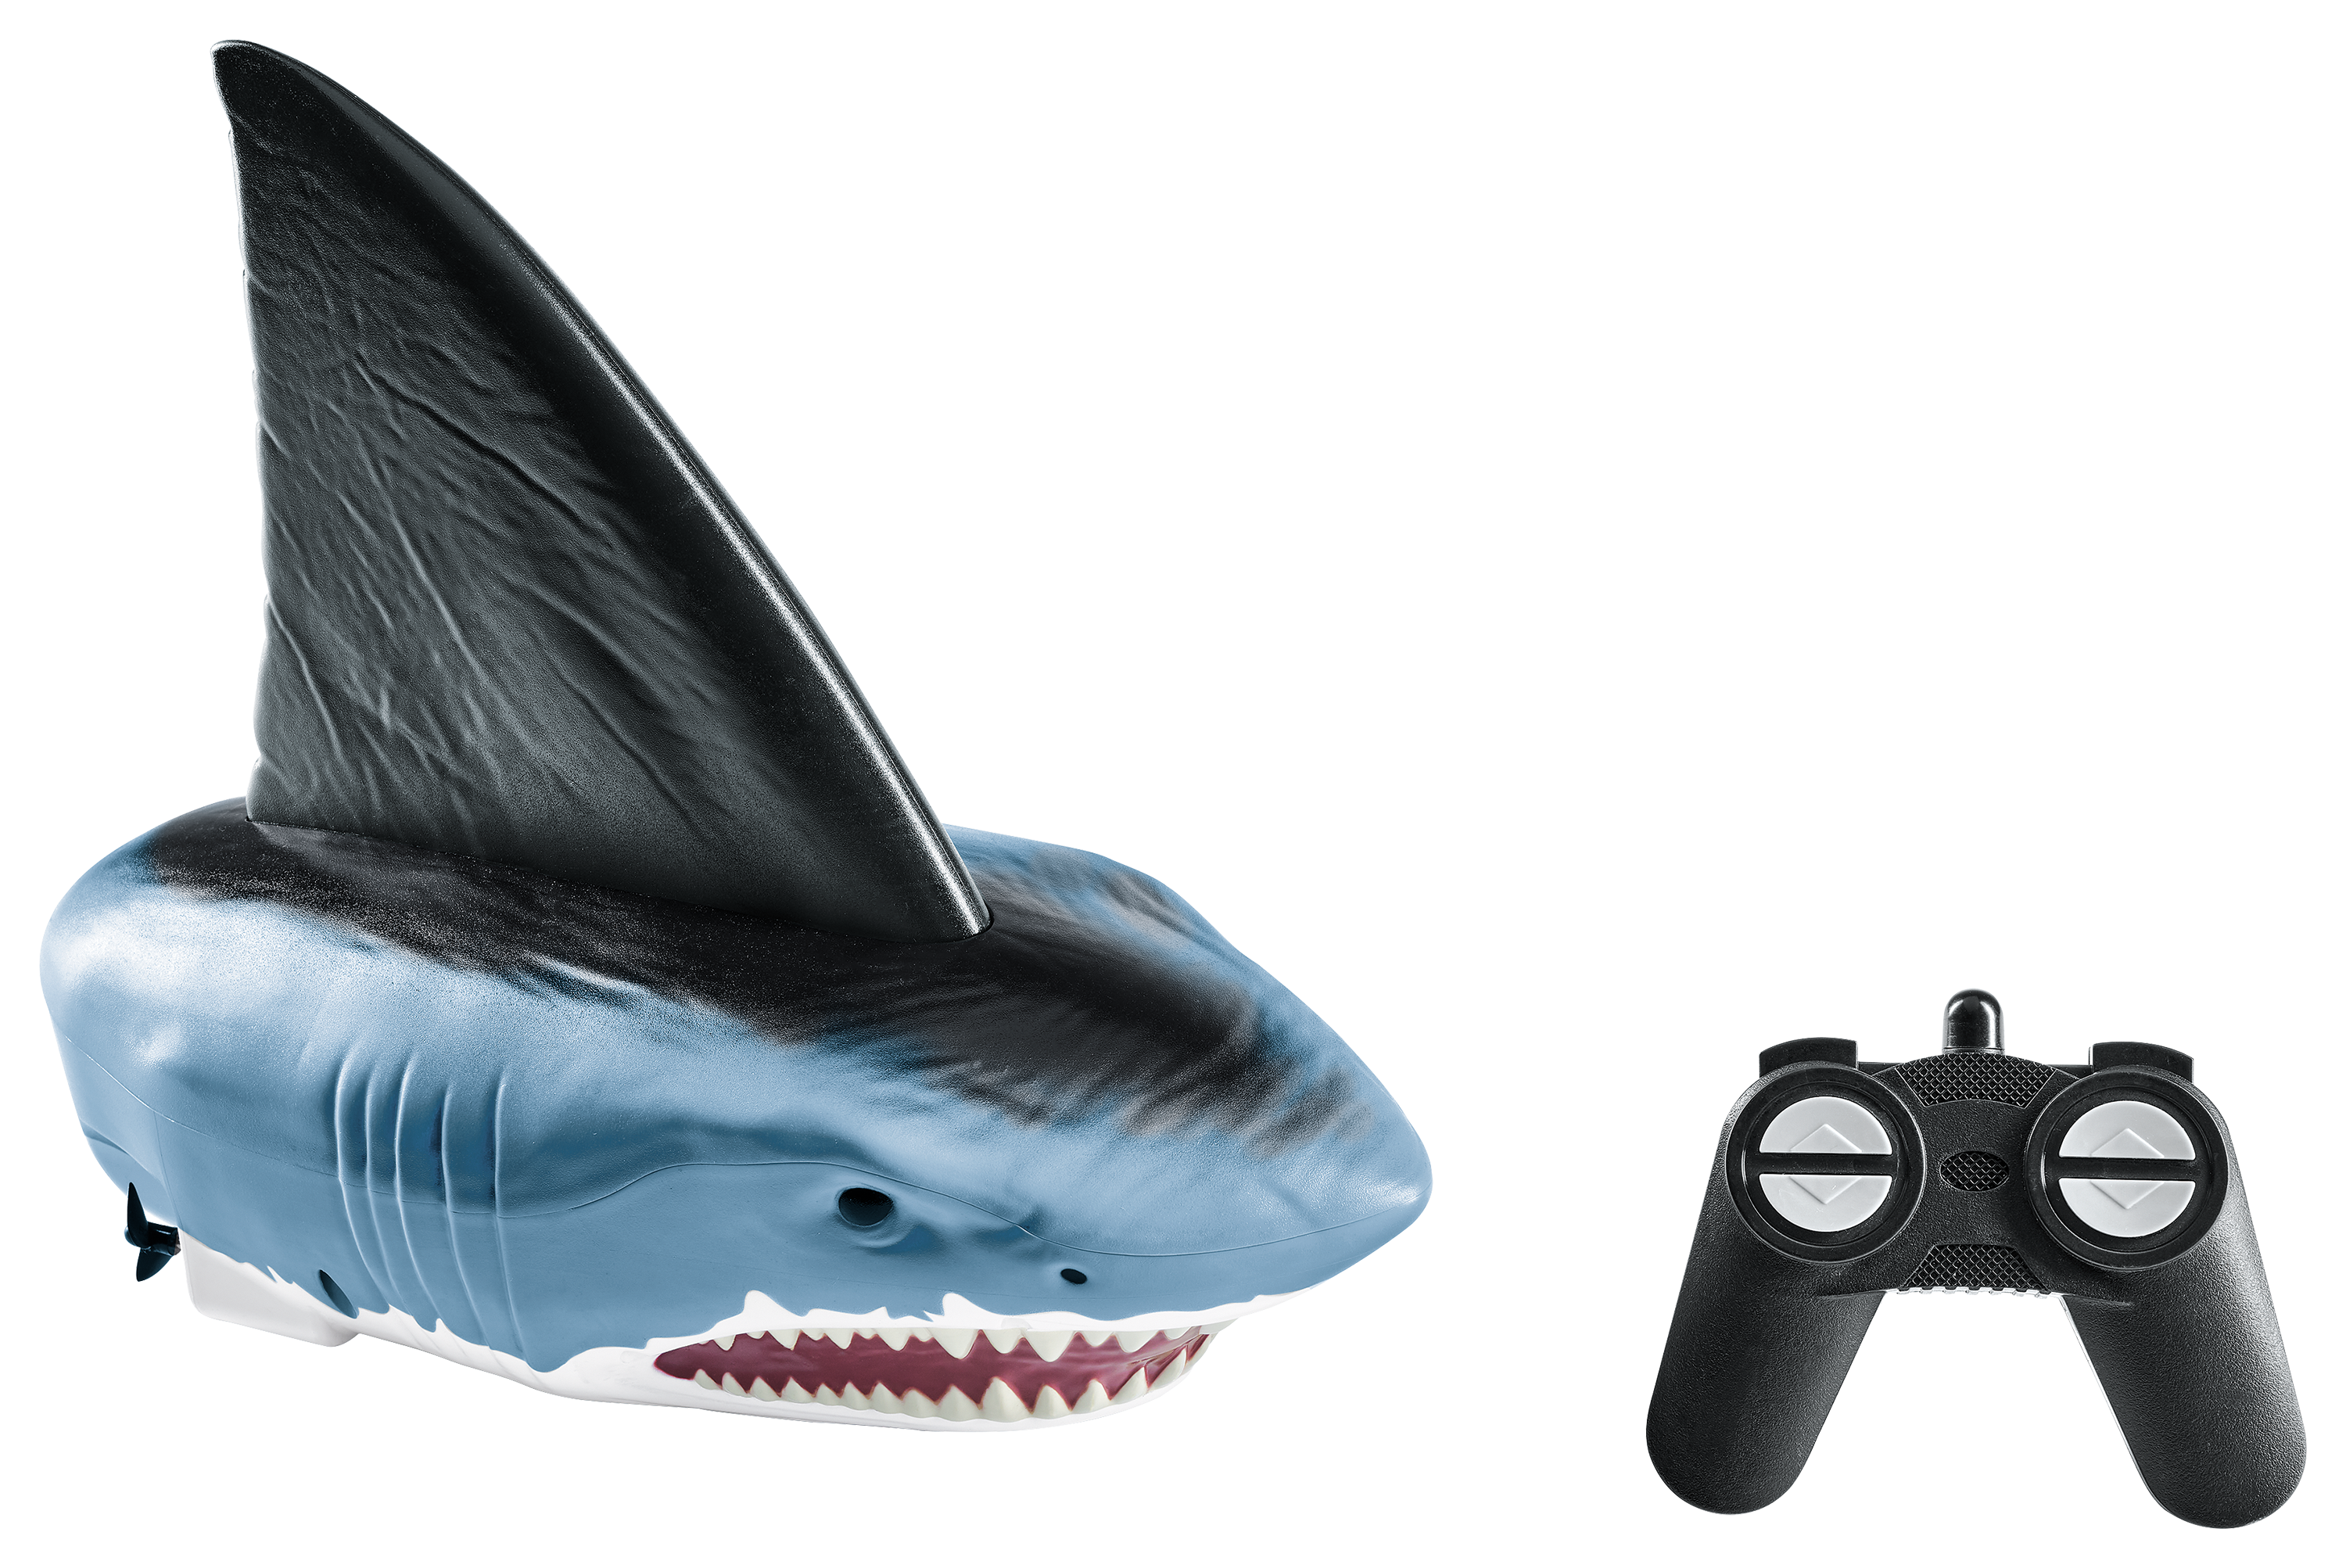 Bass Pro Shops Remote Control Trick Shark Boat